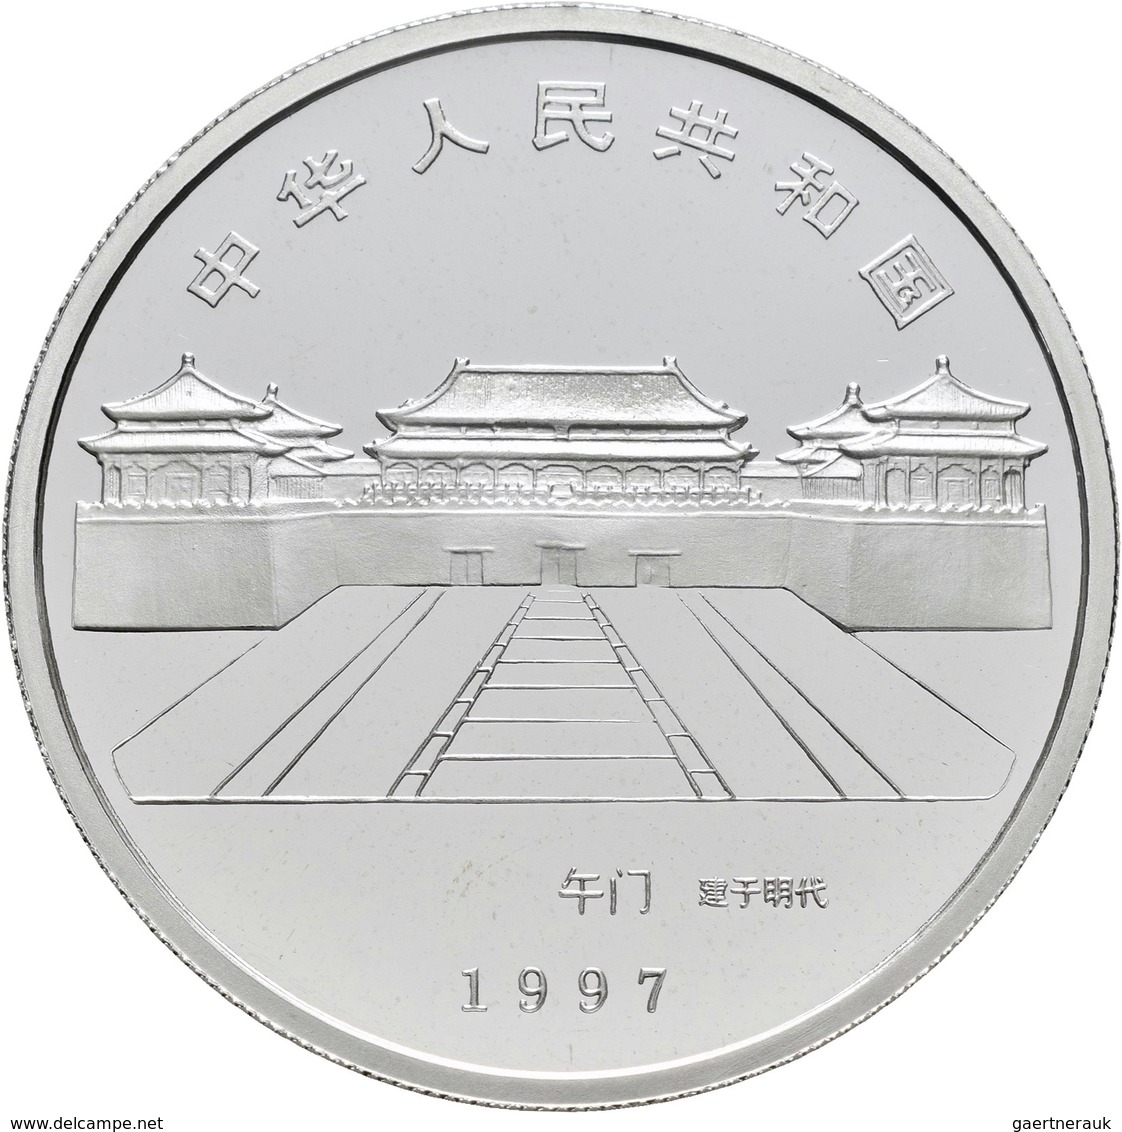 China - Volksrepublik: Lot 5 x 10 Yuan 1997, Serie Verbotene Stadt / Palastmuseum Beijing: Palast de